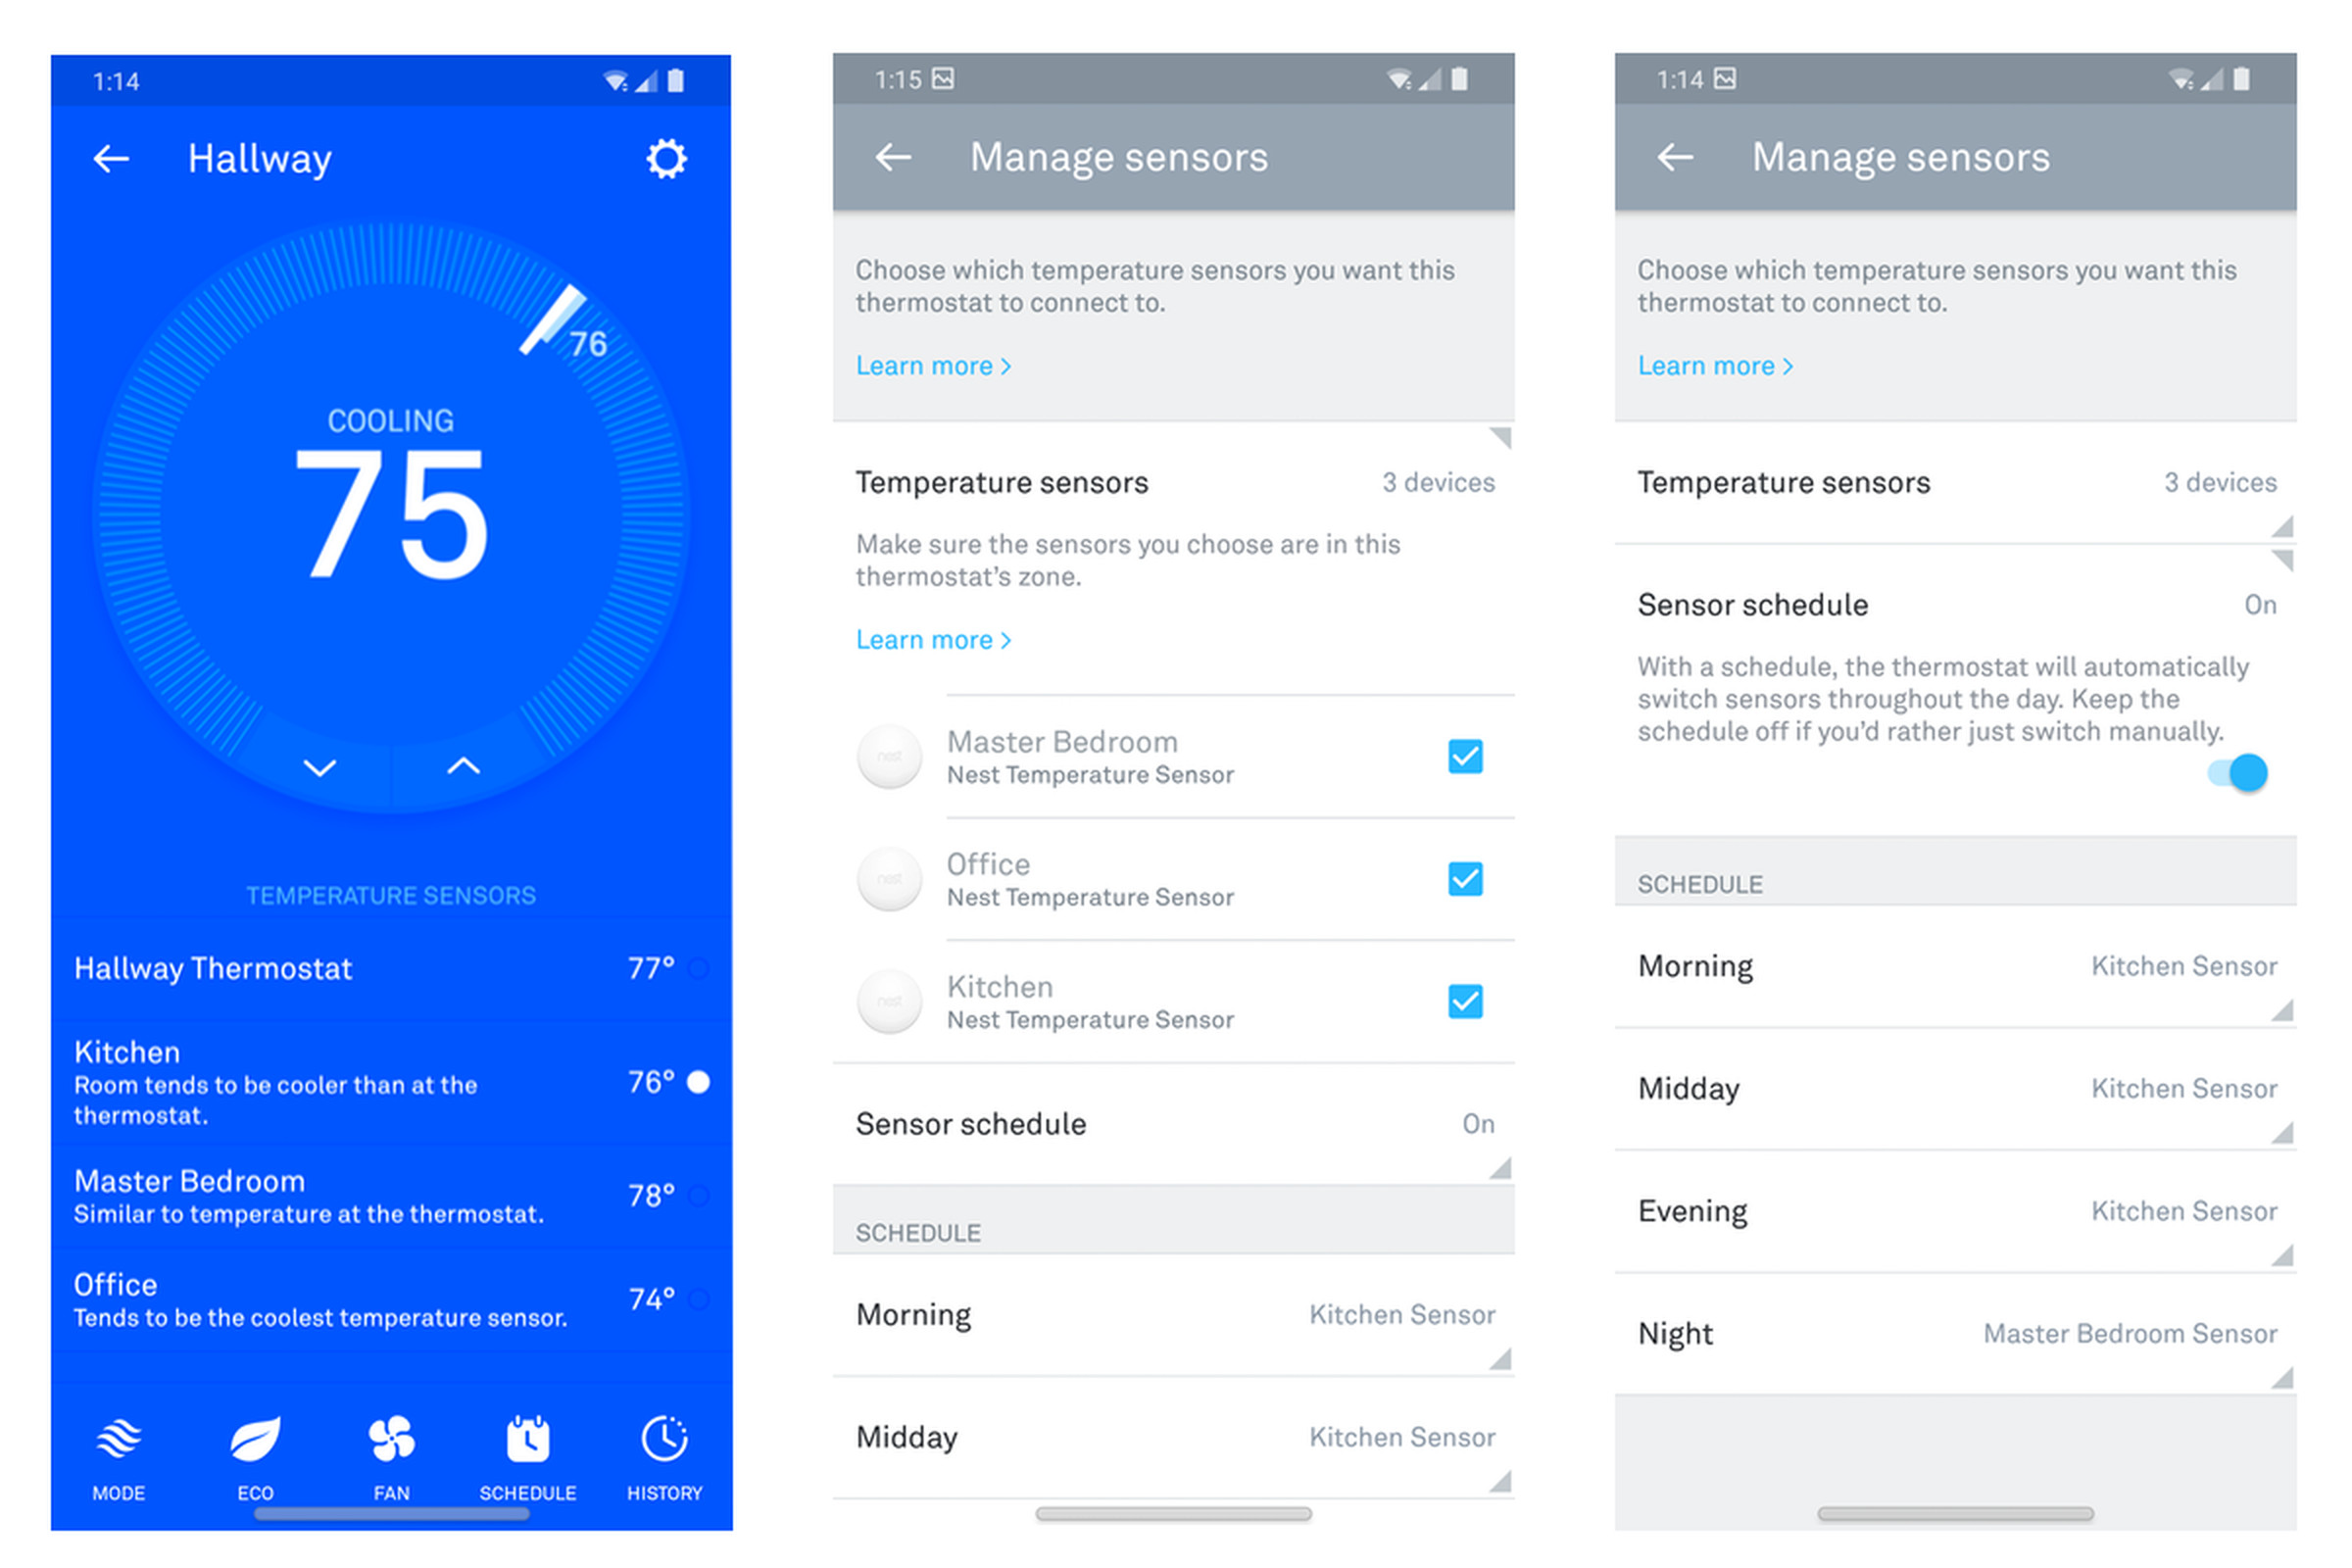 Nest Temperature Sensor options in the mobile app